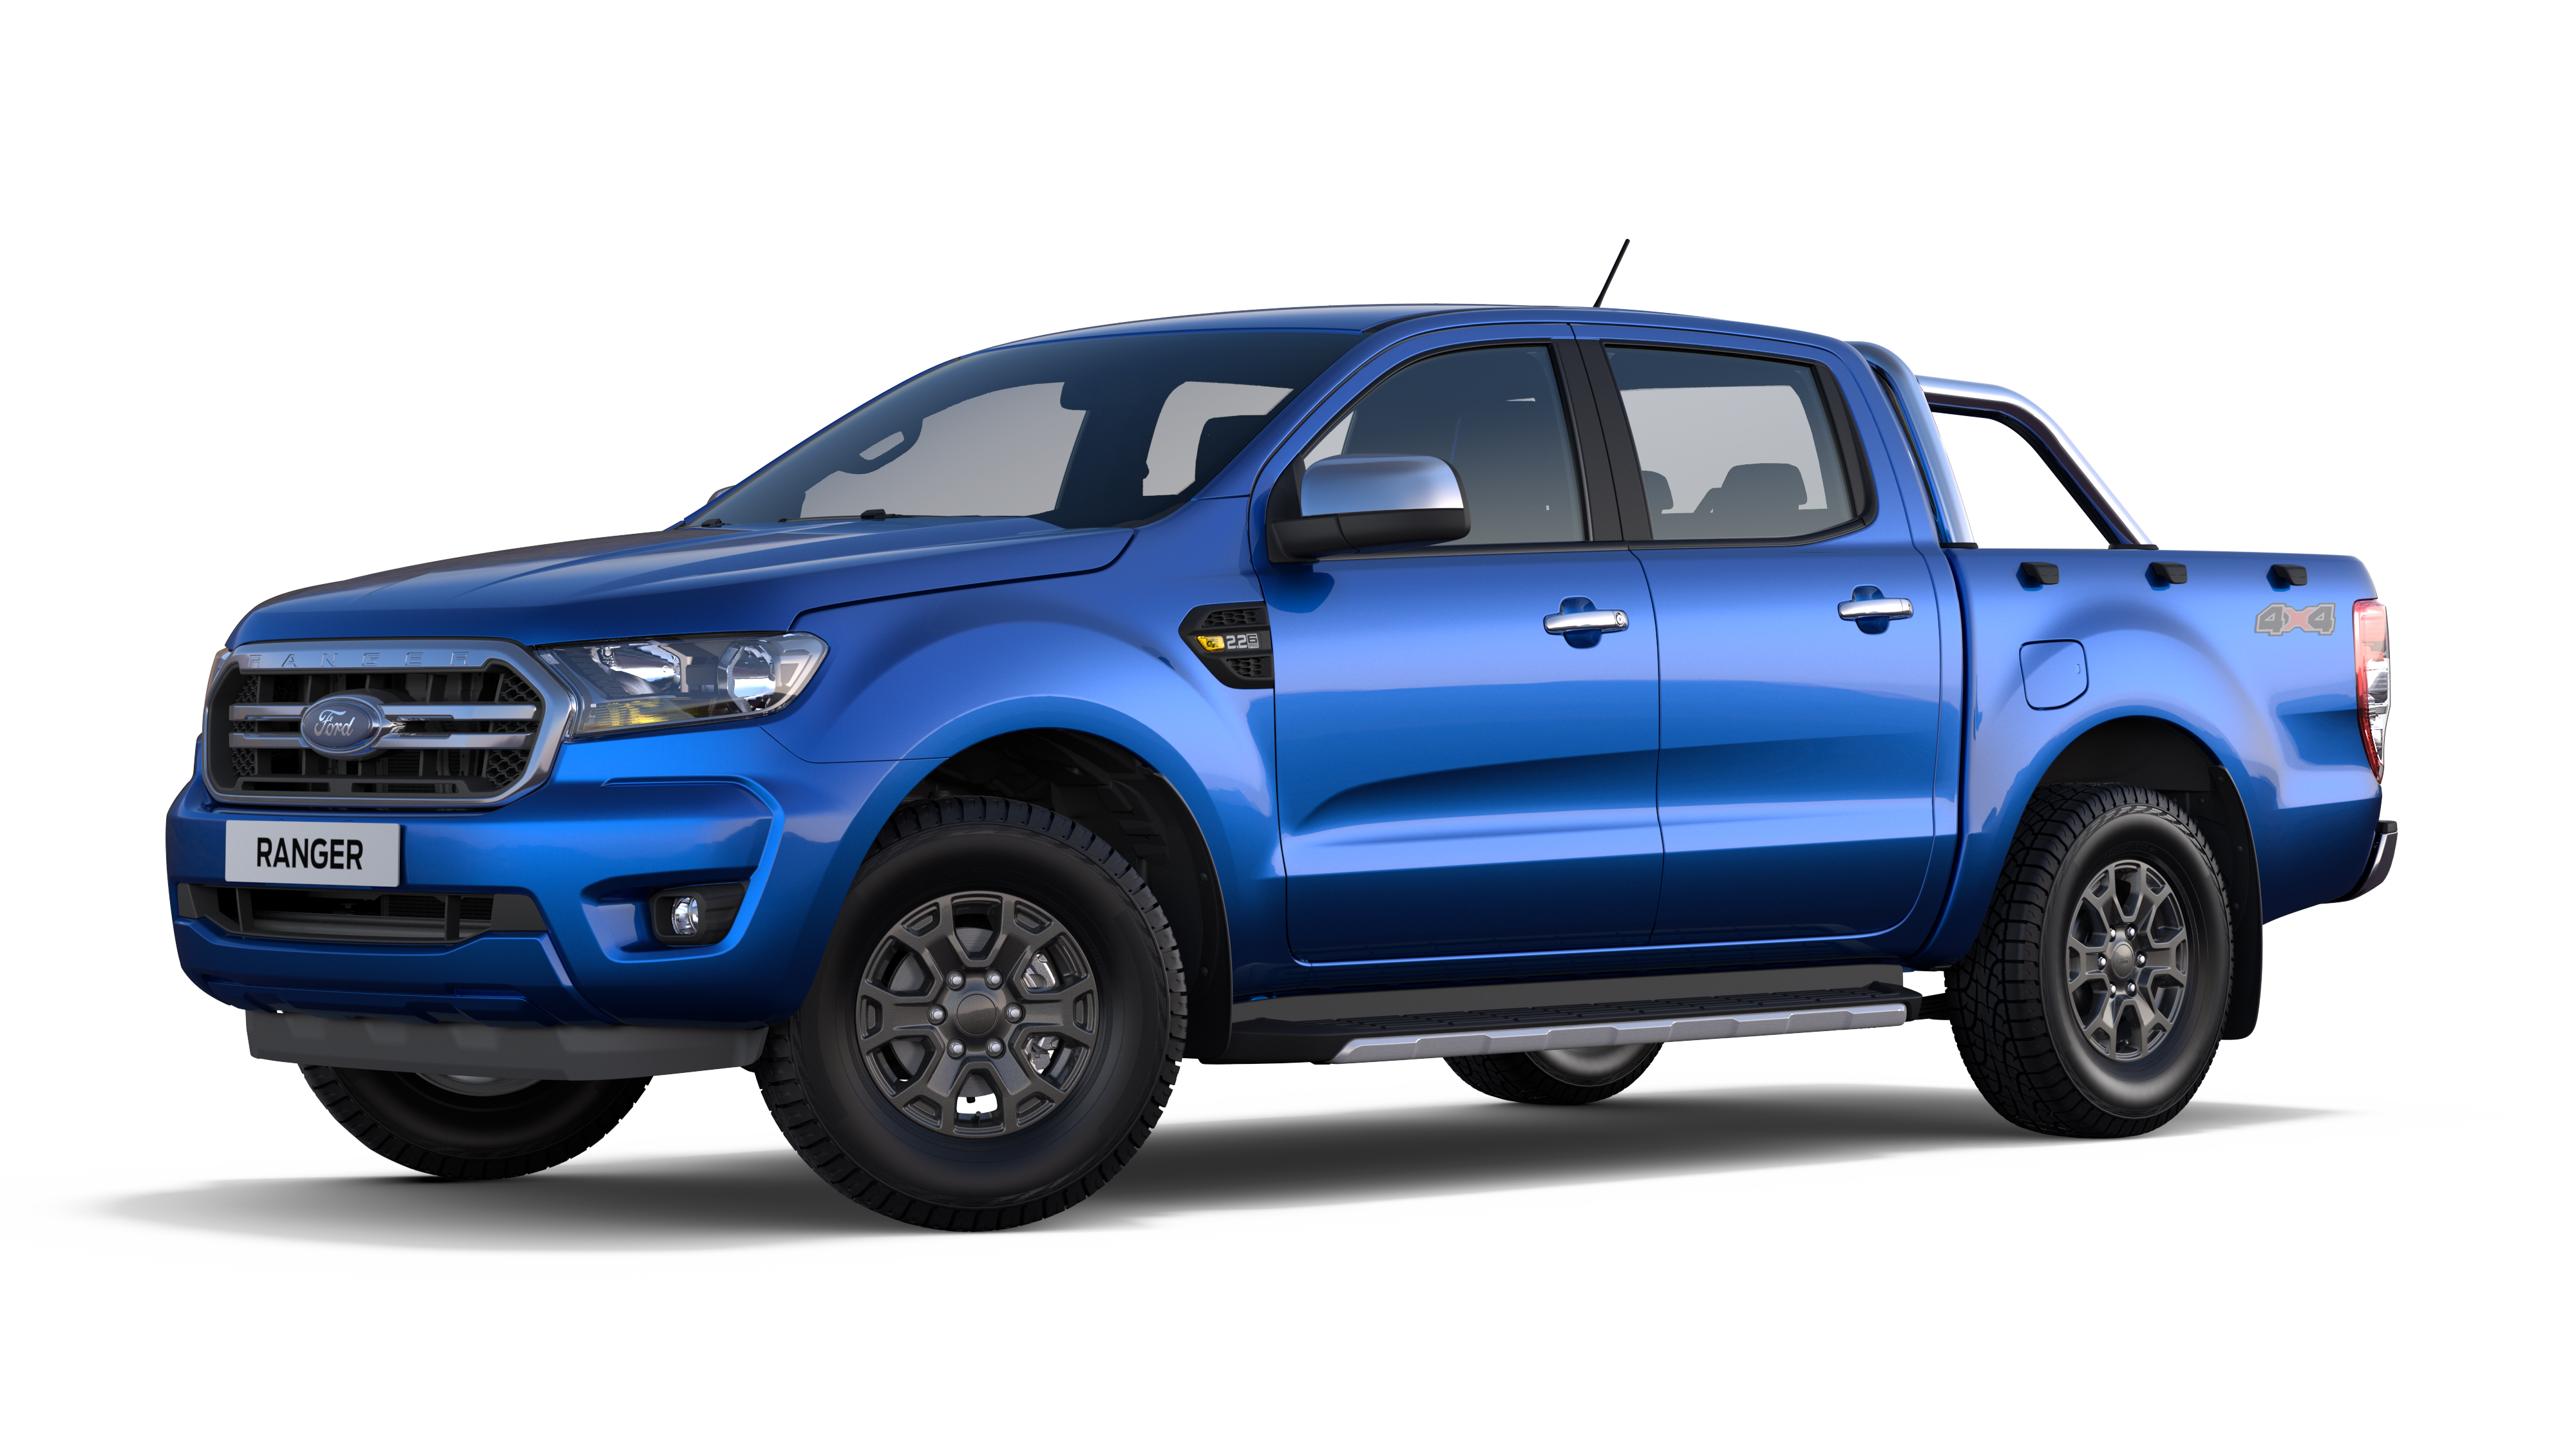 Ford Ranger XLS - Blue | Middle East | Ford Media Center